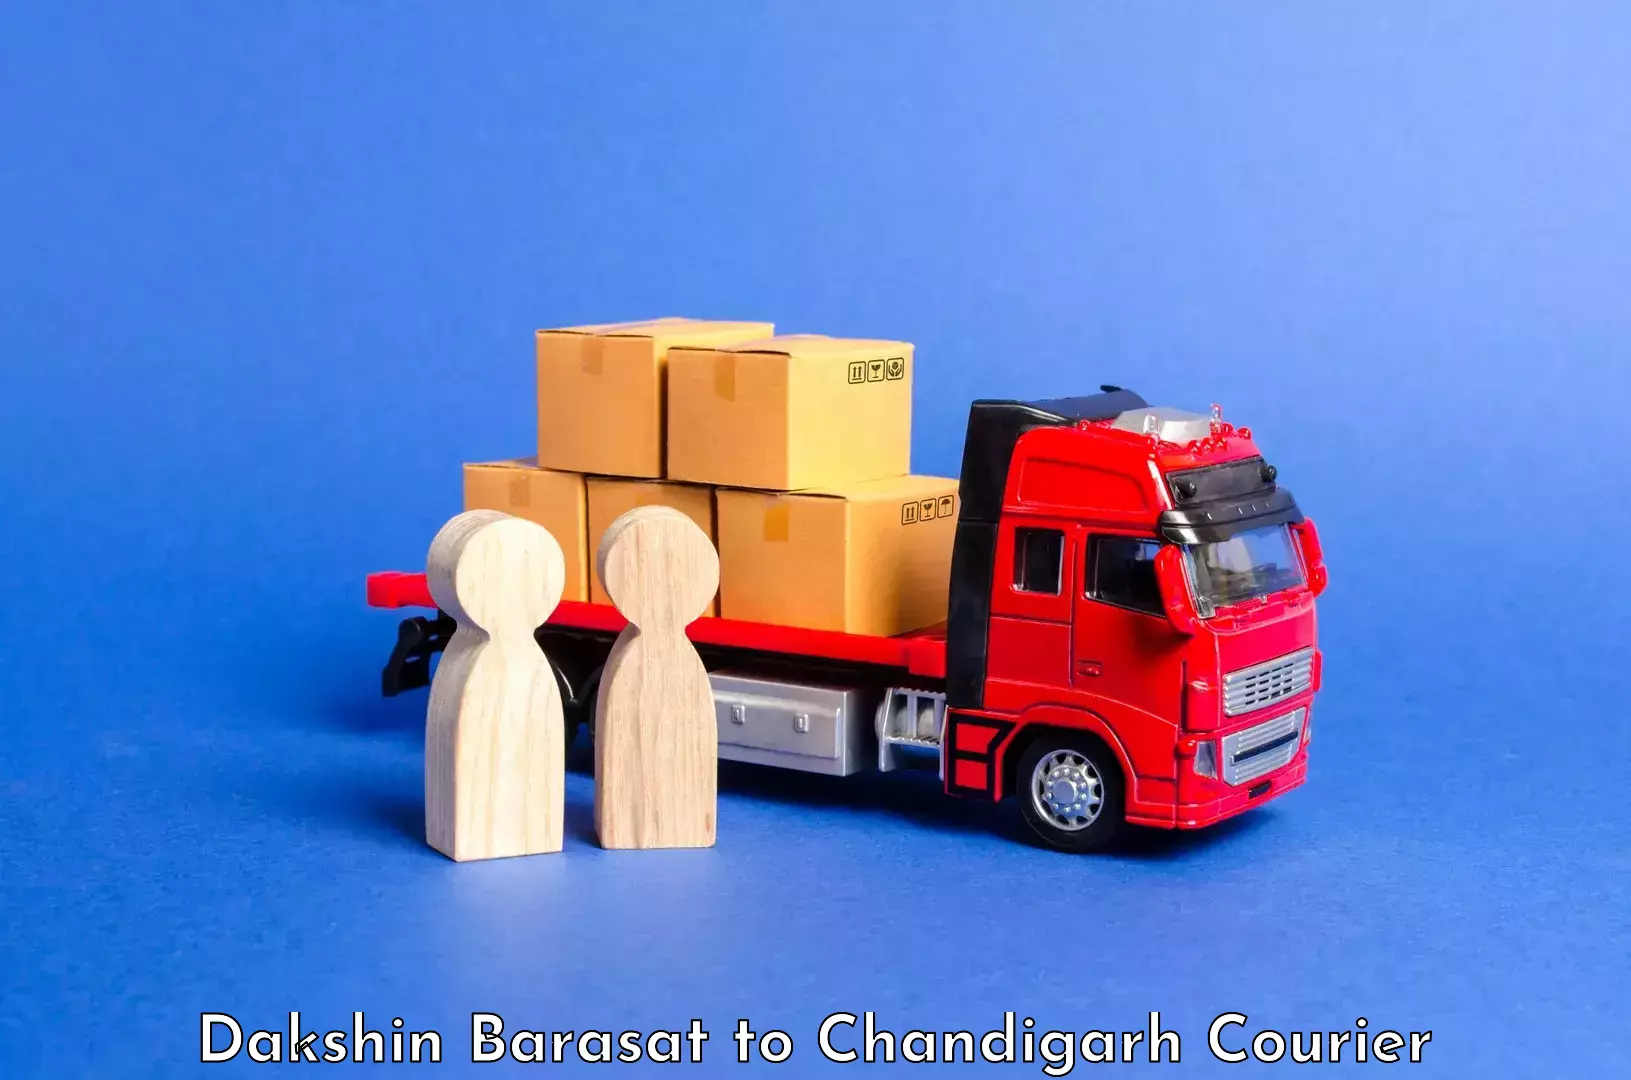 Luggage delivery app Dakshin Barasat to Chandigarh